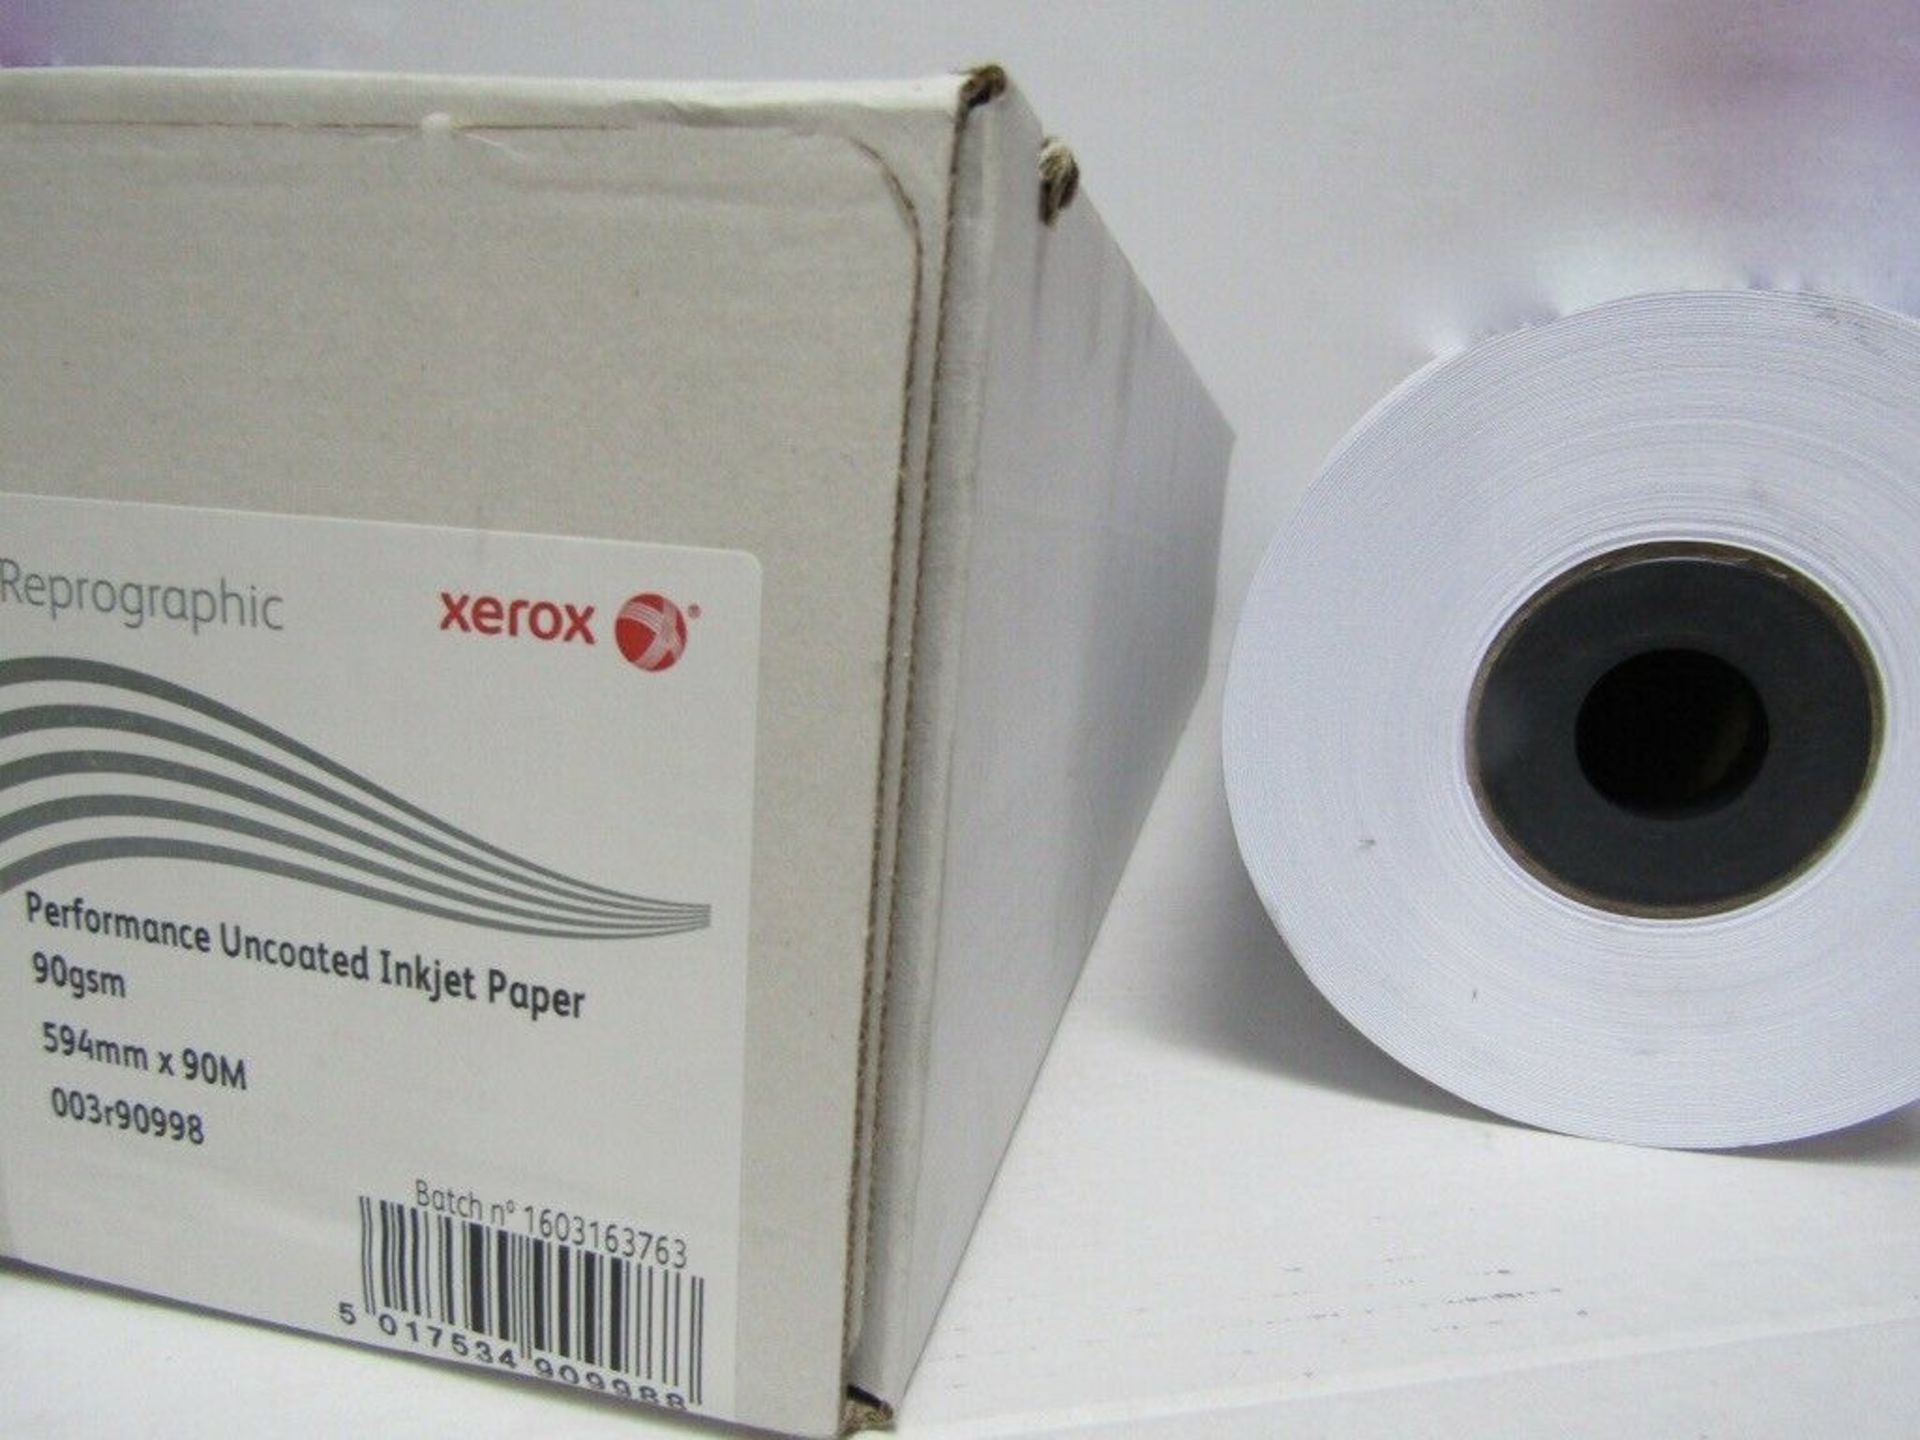 Xerox Performance Uncoated Inkjet Paper FSC CAD 594mm x 90m 90gsm.